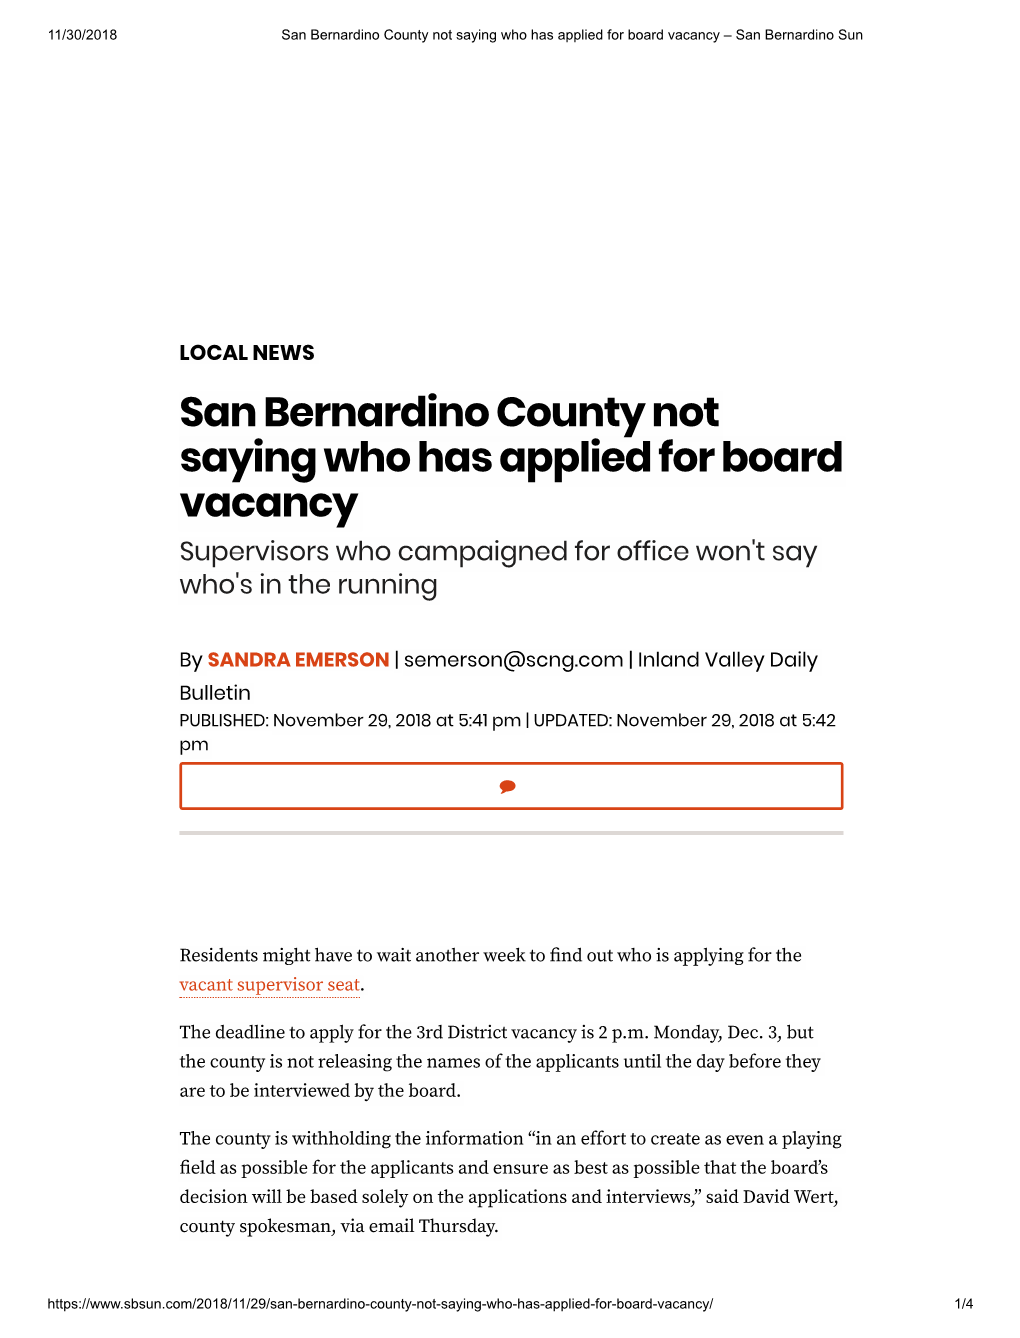 San Bernardino County Not Saying Who Has Applied for Board Vacancy – San Bernardino Sun